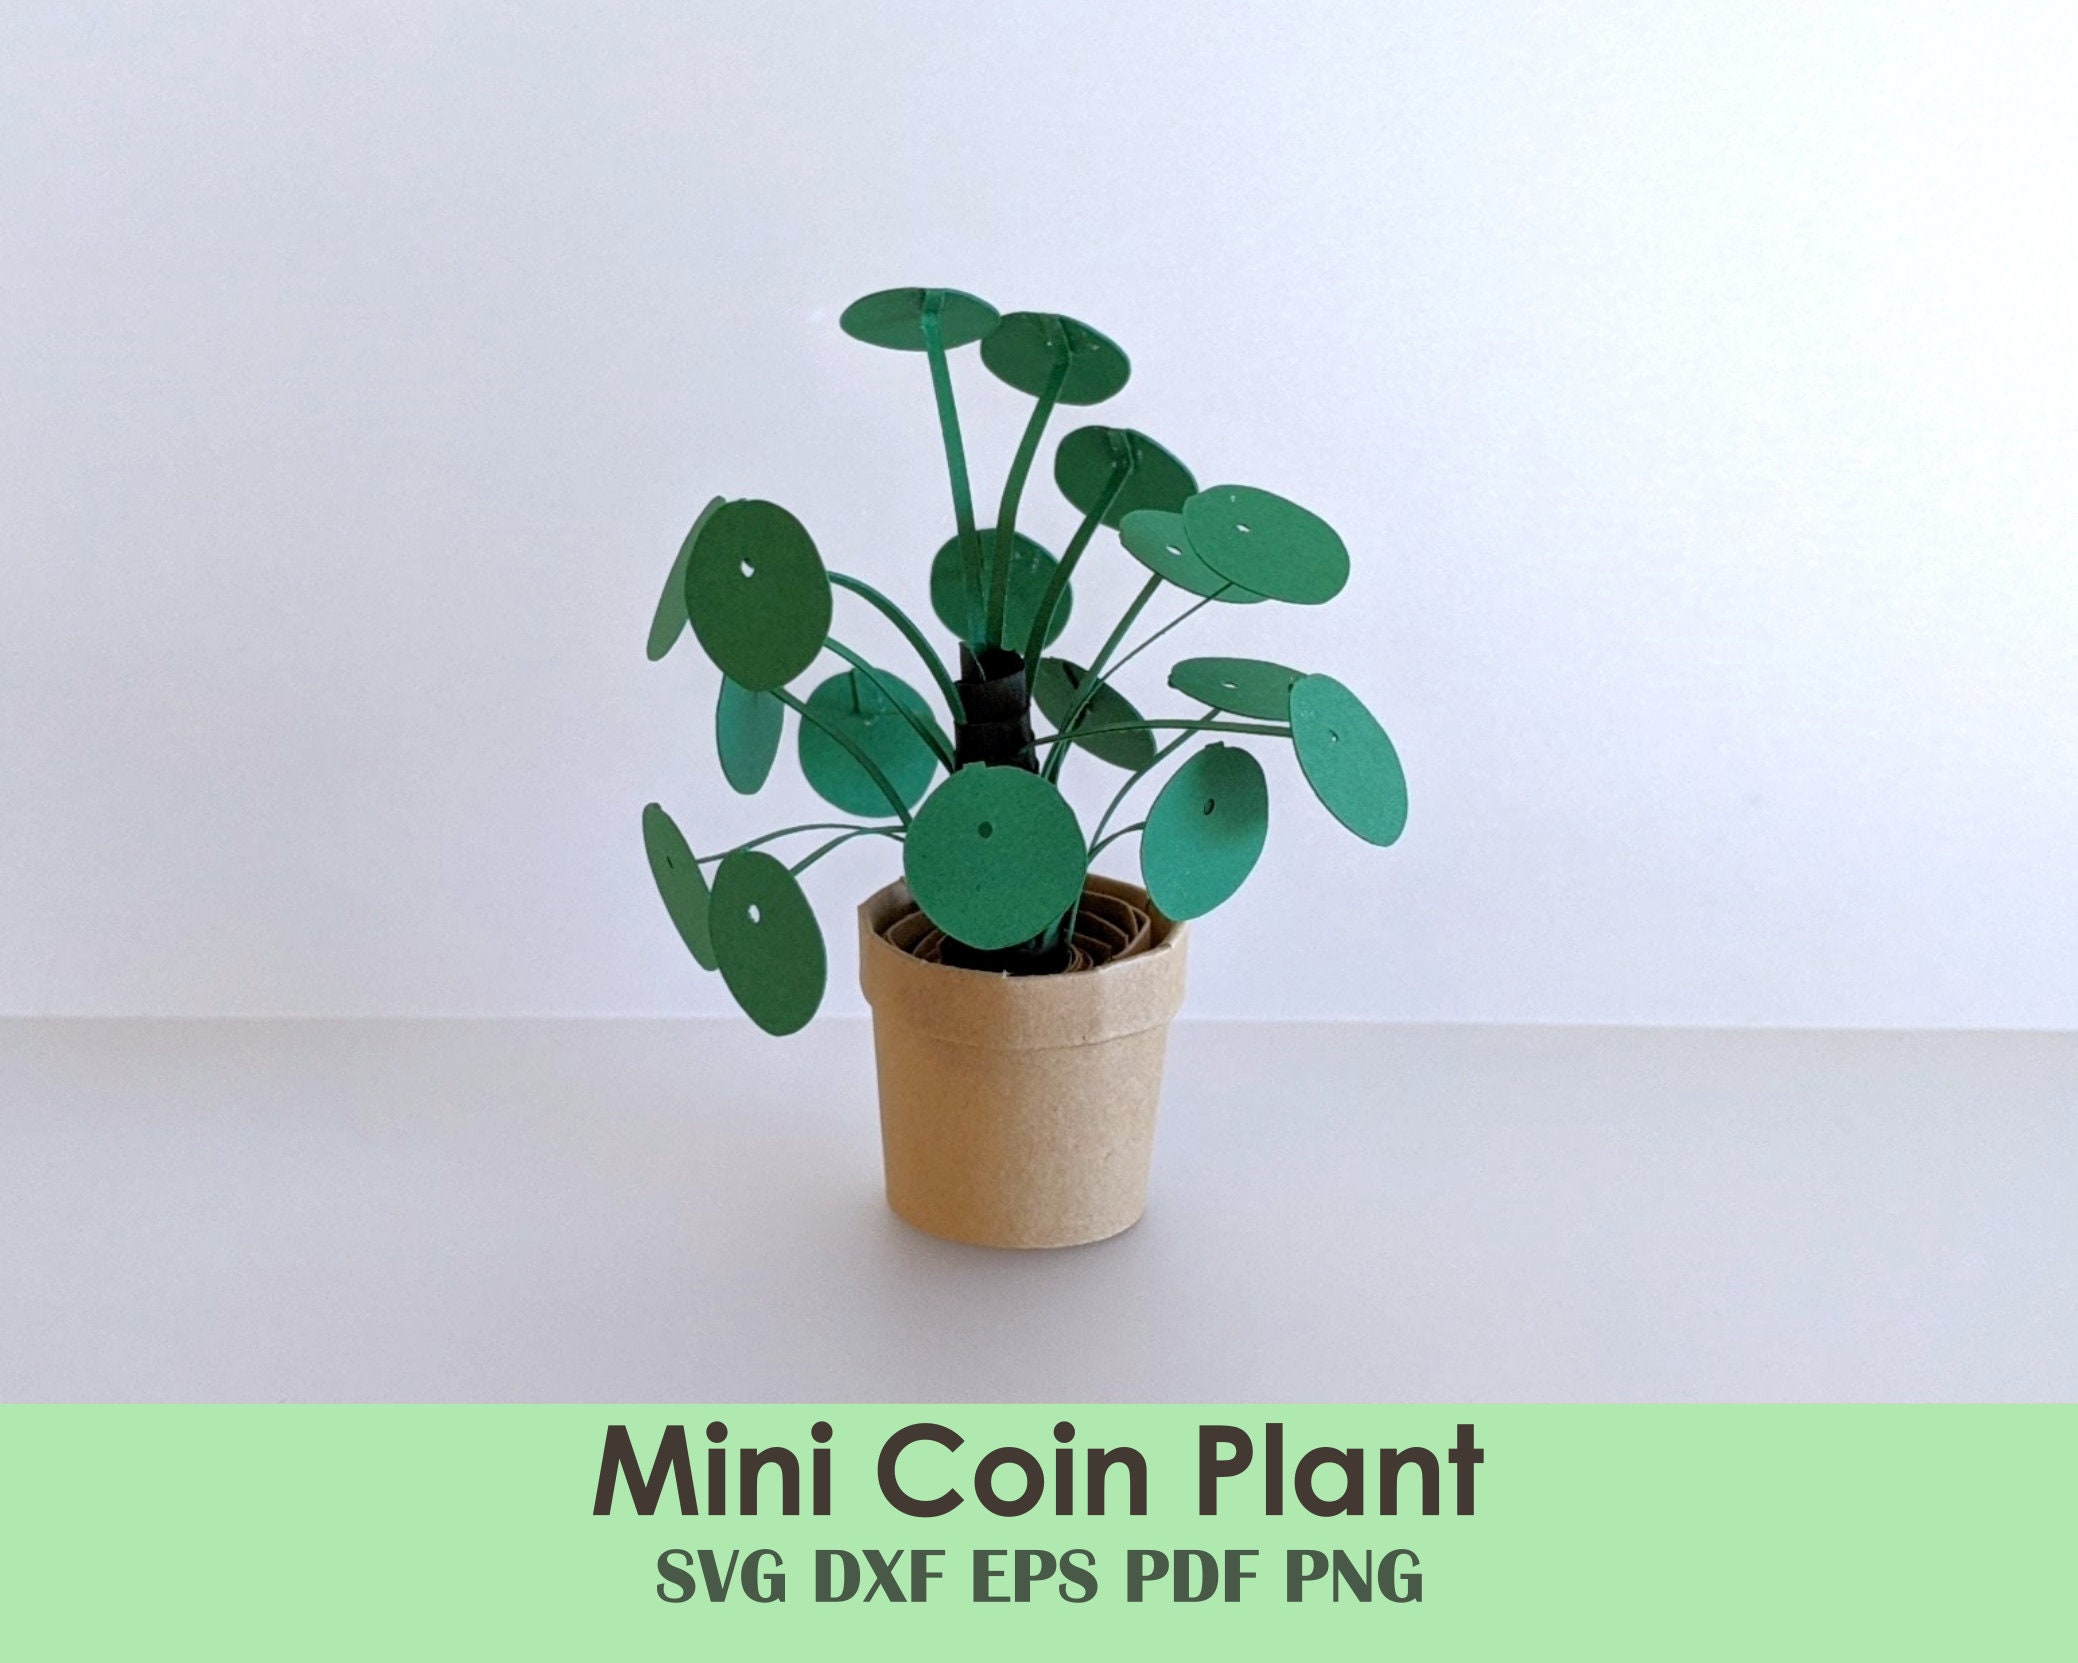 Miniverse Make It Mini Lifestyle PILEA PAIR Plants 